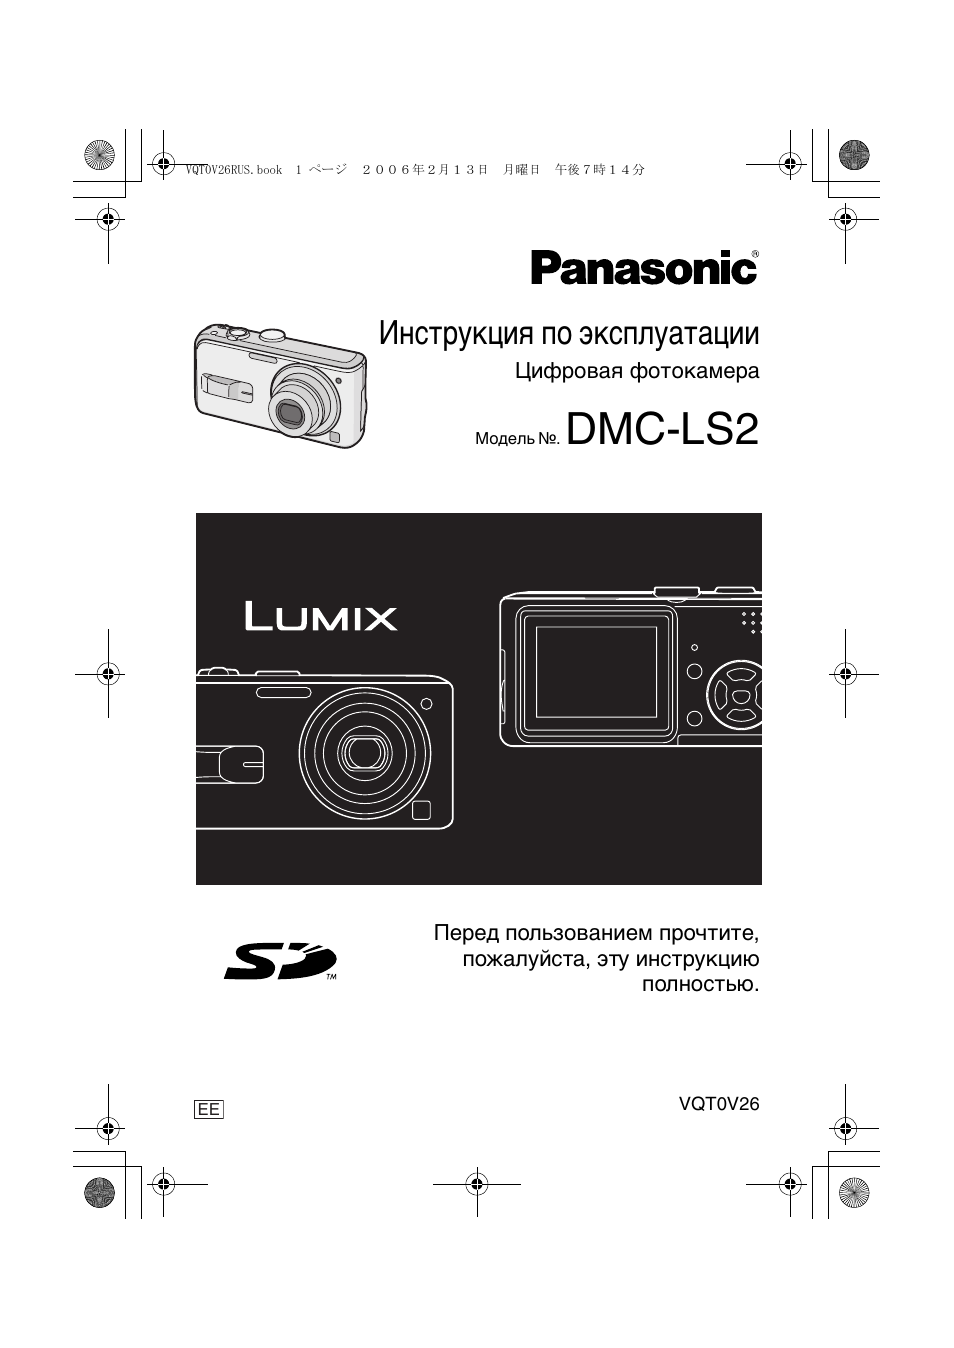 Инструкция panasonic dmc. Panasonic Lumix DMC-ls2. Инструкция к фотокамере Панасоник. Фотоаппарат Люмикс Панасоник инструкция. Инструкция DMC 20198.